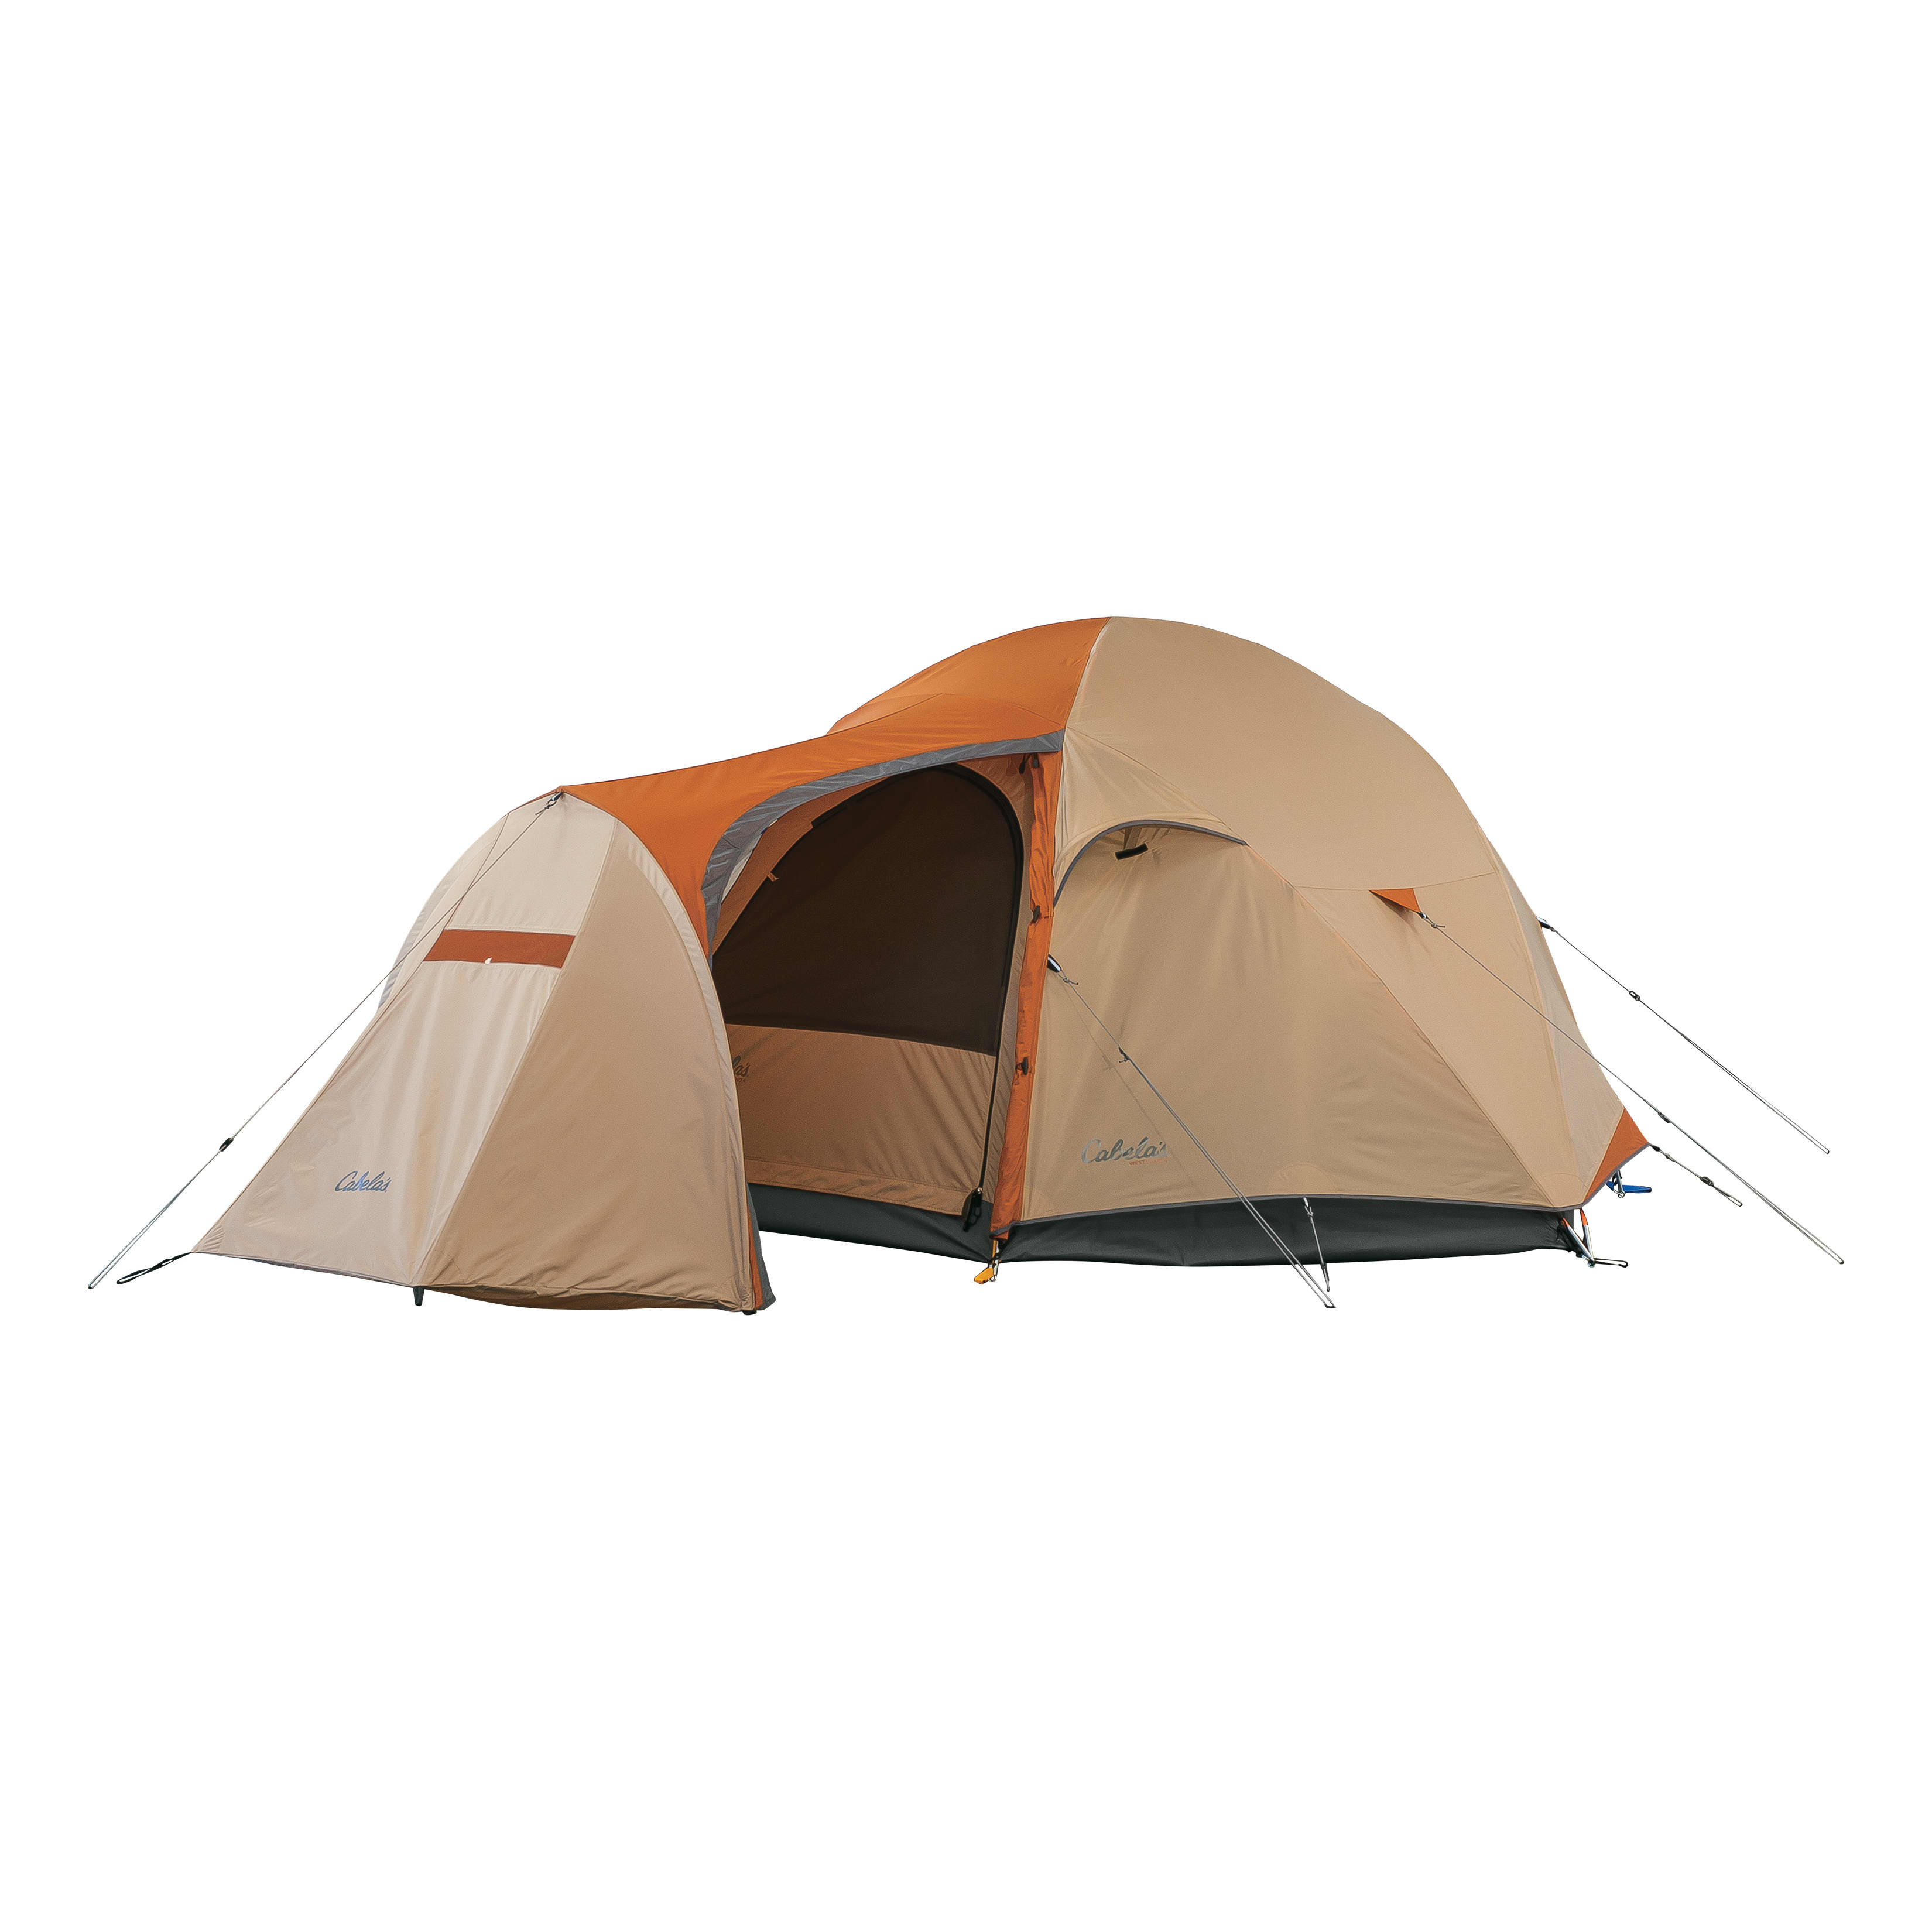 Cabela’s West Wind™ Dome Tent - Vestibule - Fly door open - Orange,Cabela’s West Wind™ Dome Tent - Vestibule - Fly door open - Orange